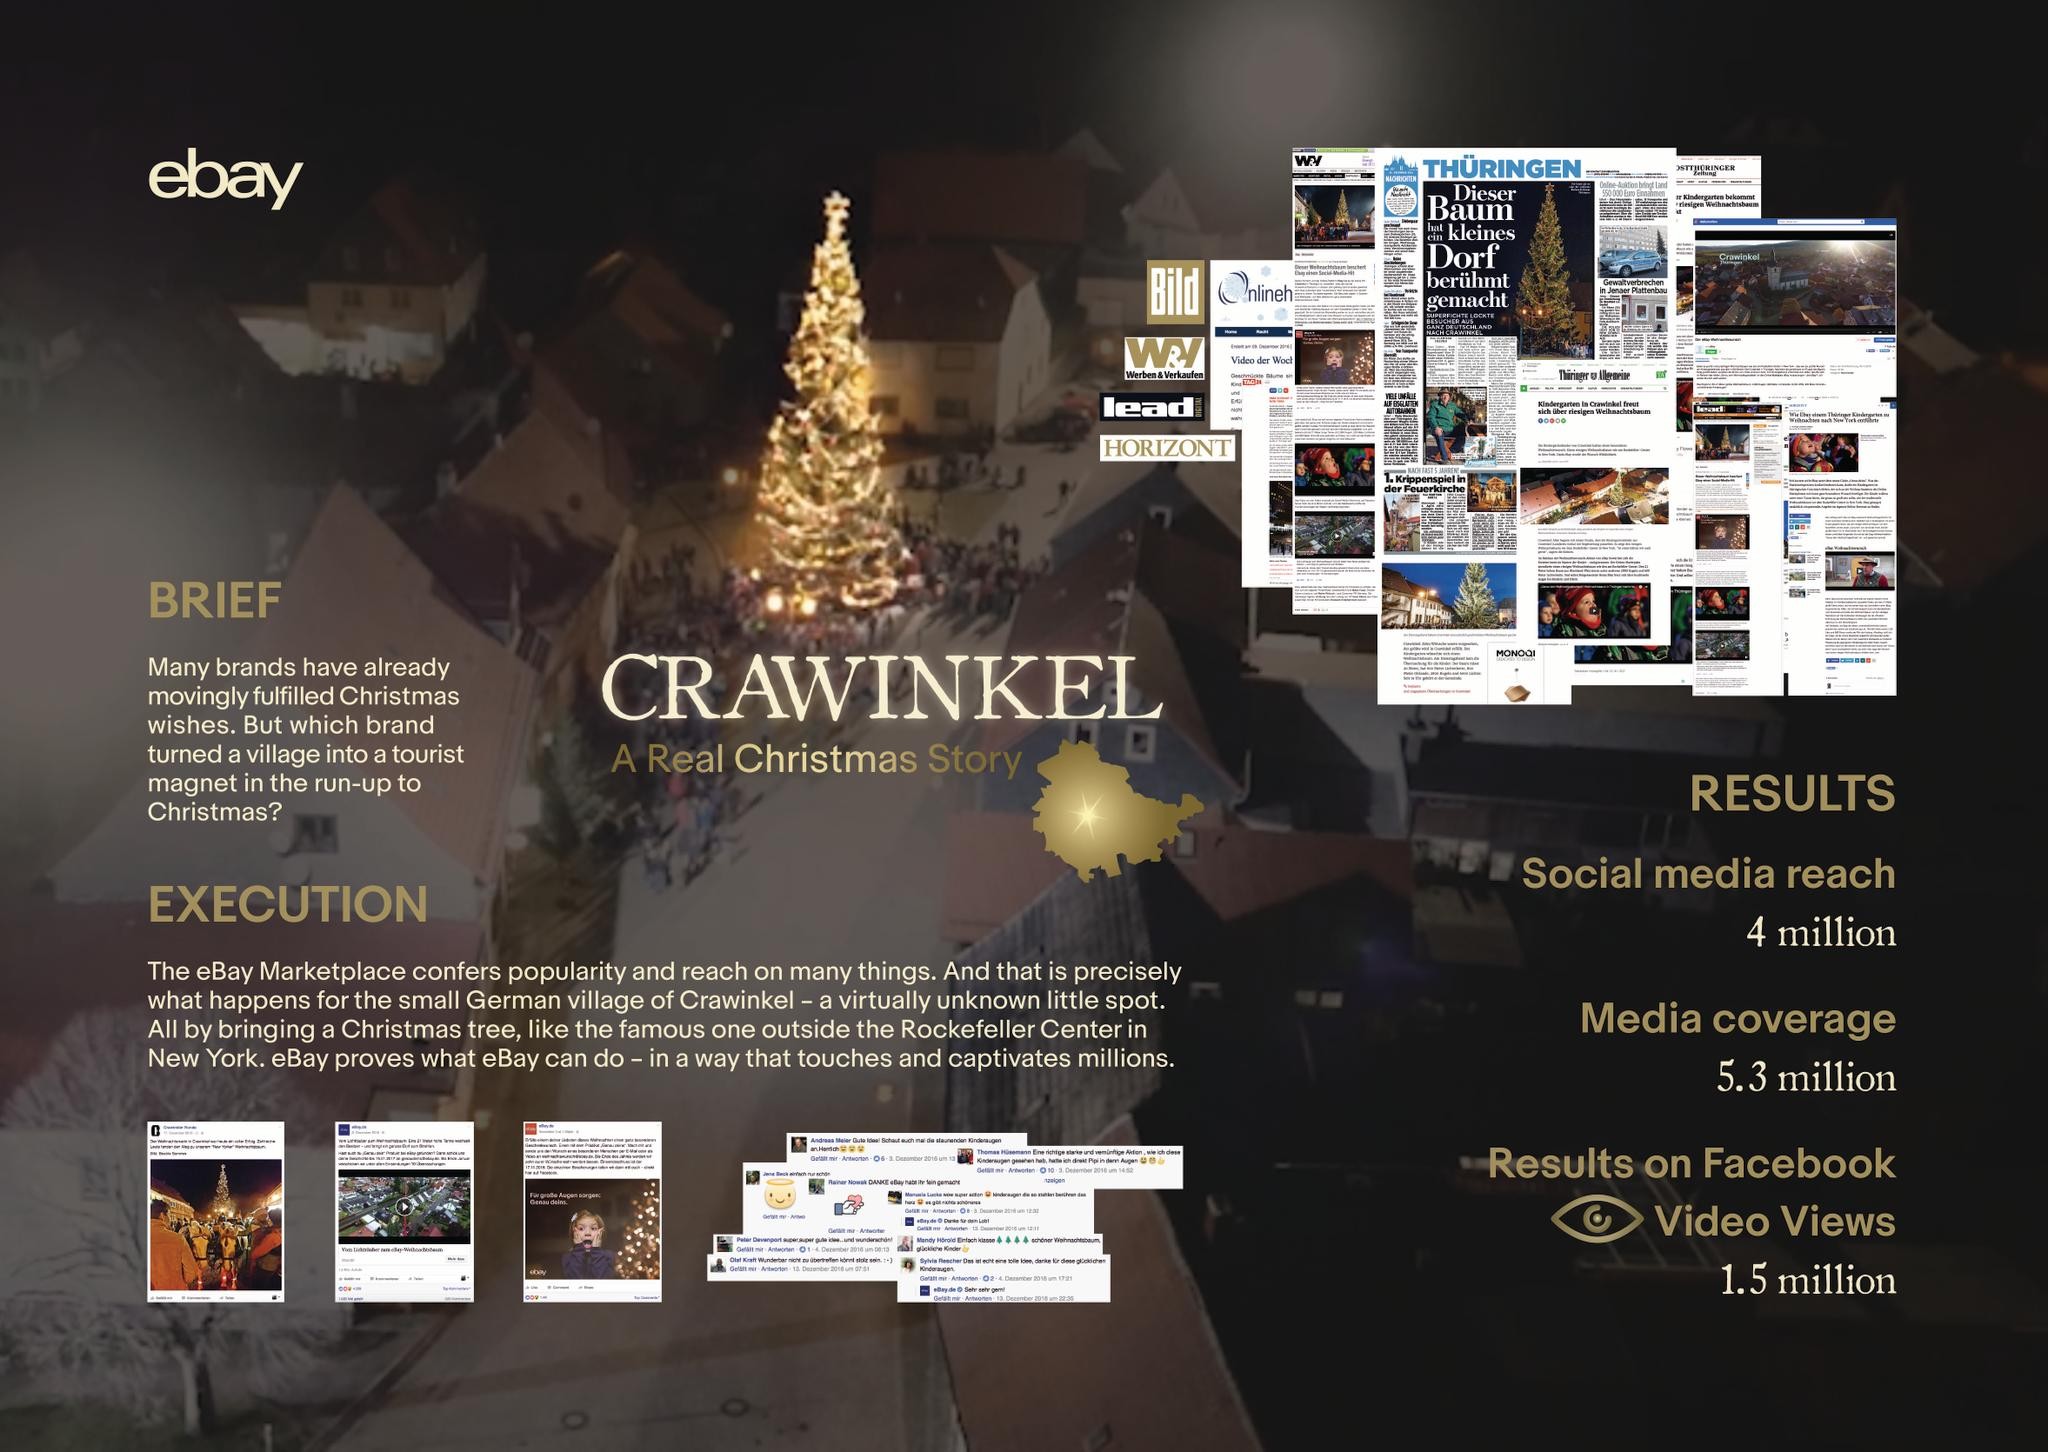 Crawinkel – A Real Christmas Story